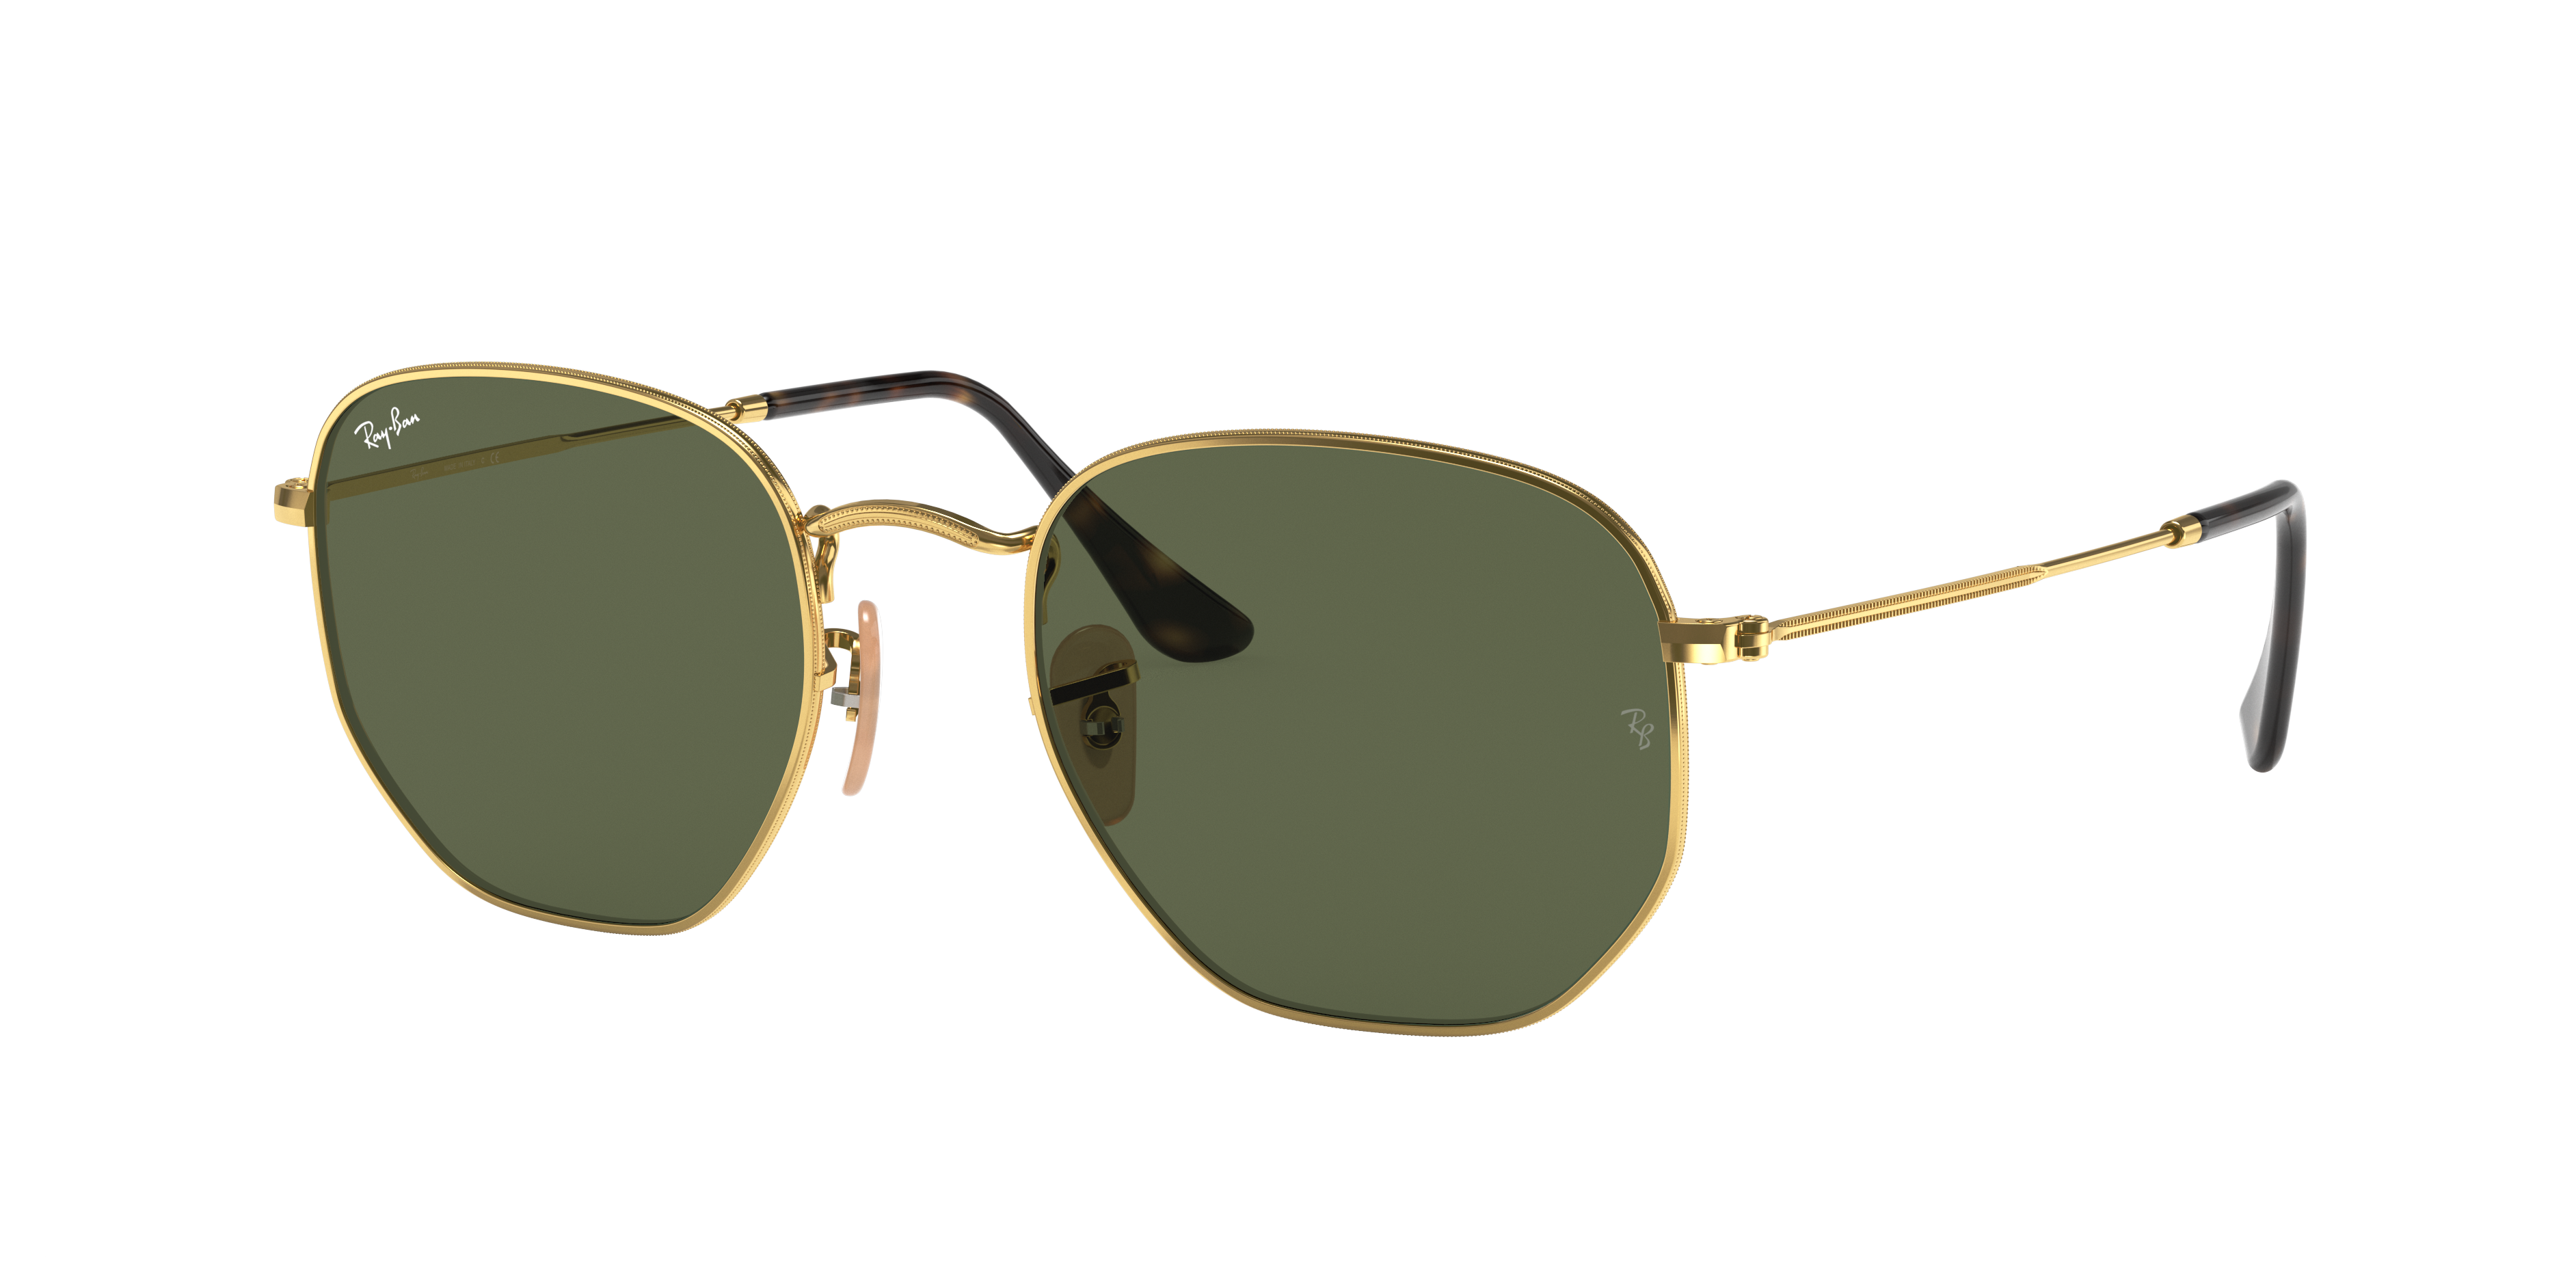 Metallic Ray-Ban Hexagonal Sunglasses in Gold Womens Accessories Sunglasses 